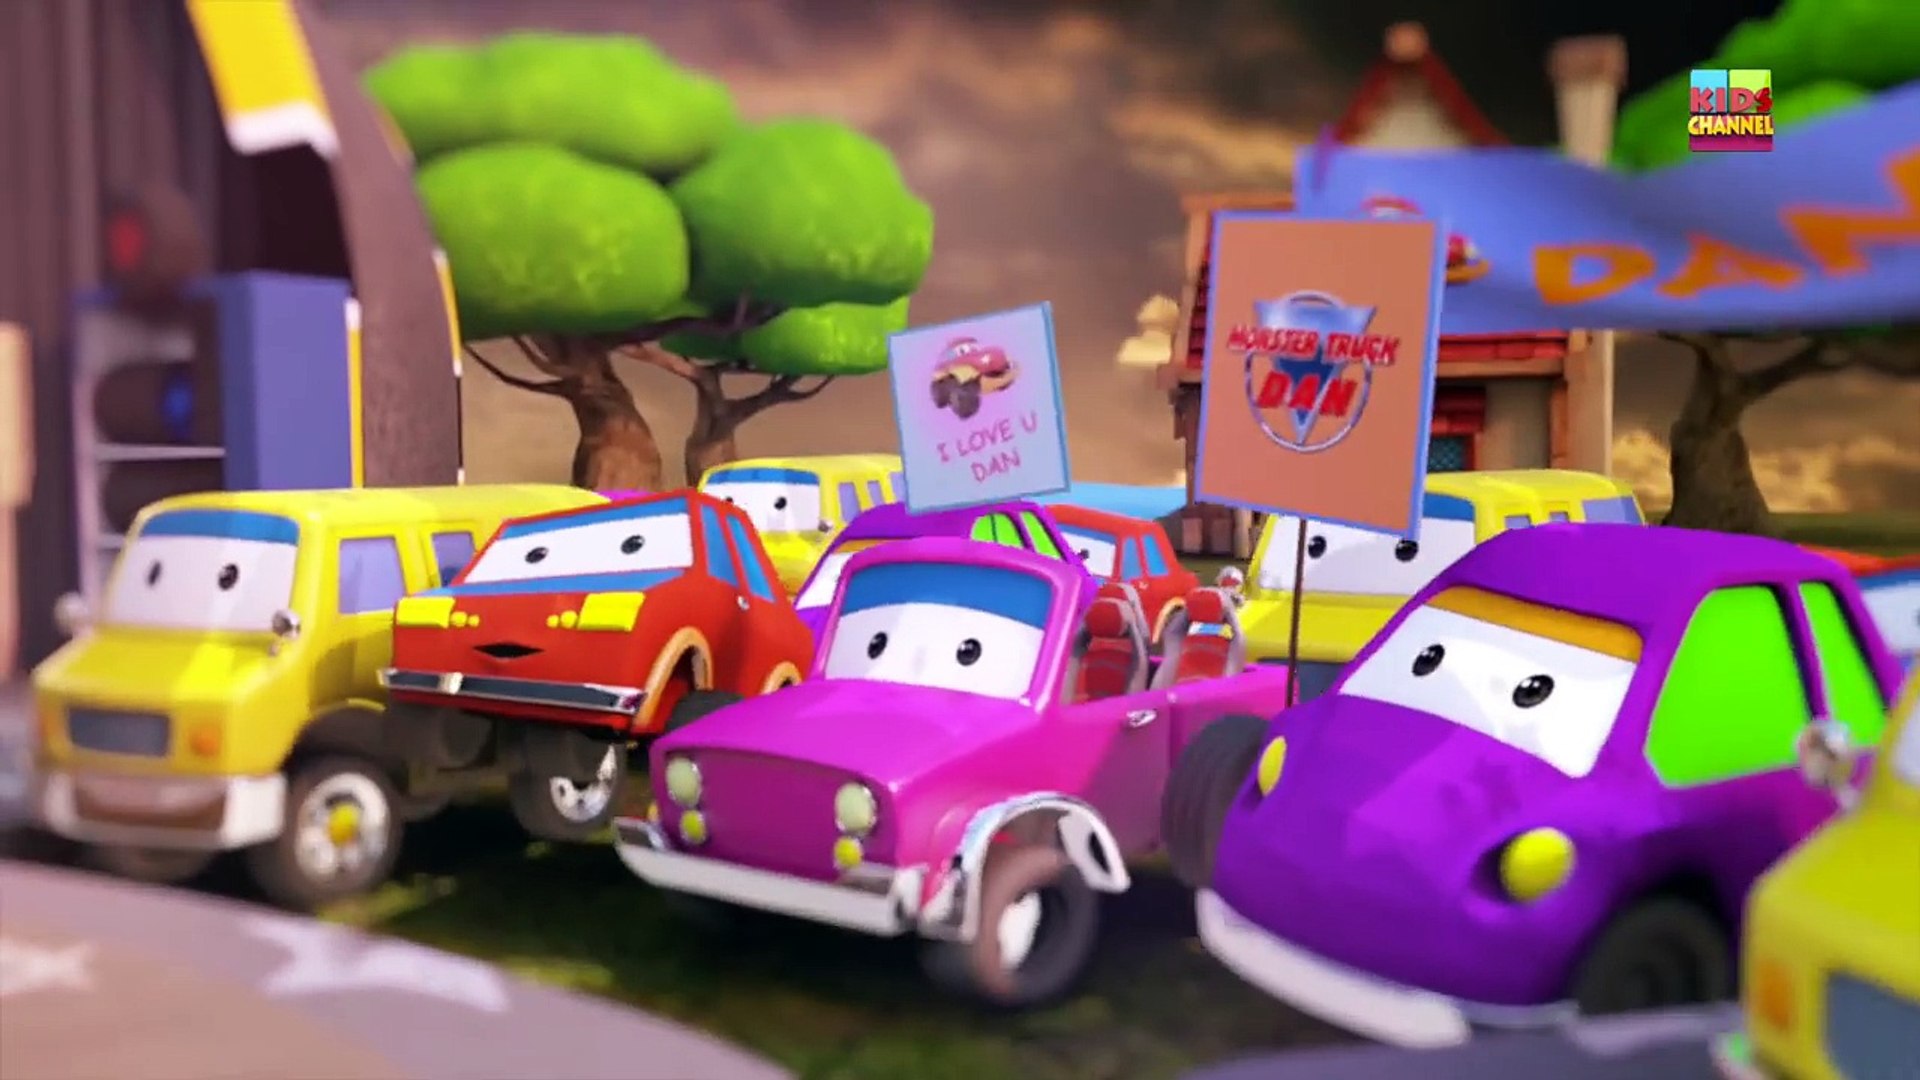 Goal Monster Truck Dan Car Cartoon Videos And Stories For Kids, Kids  Channel